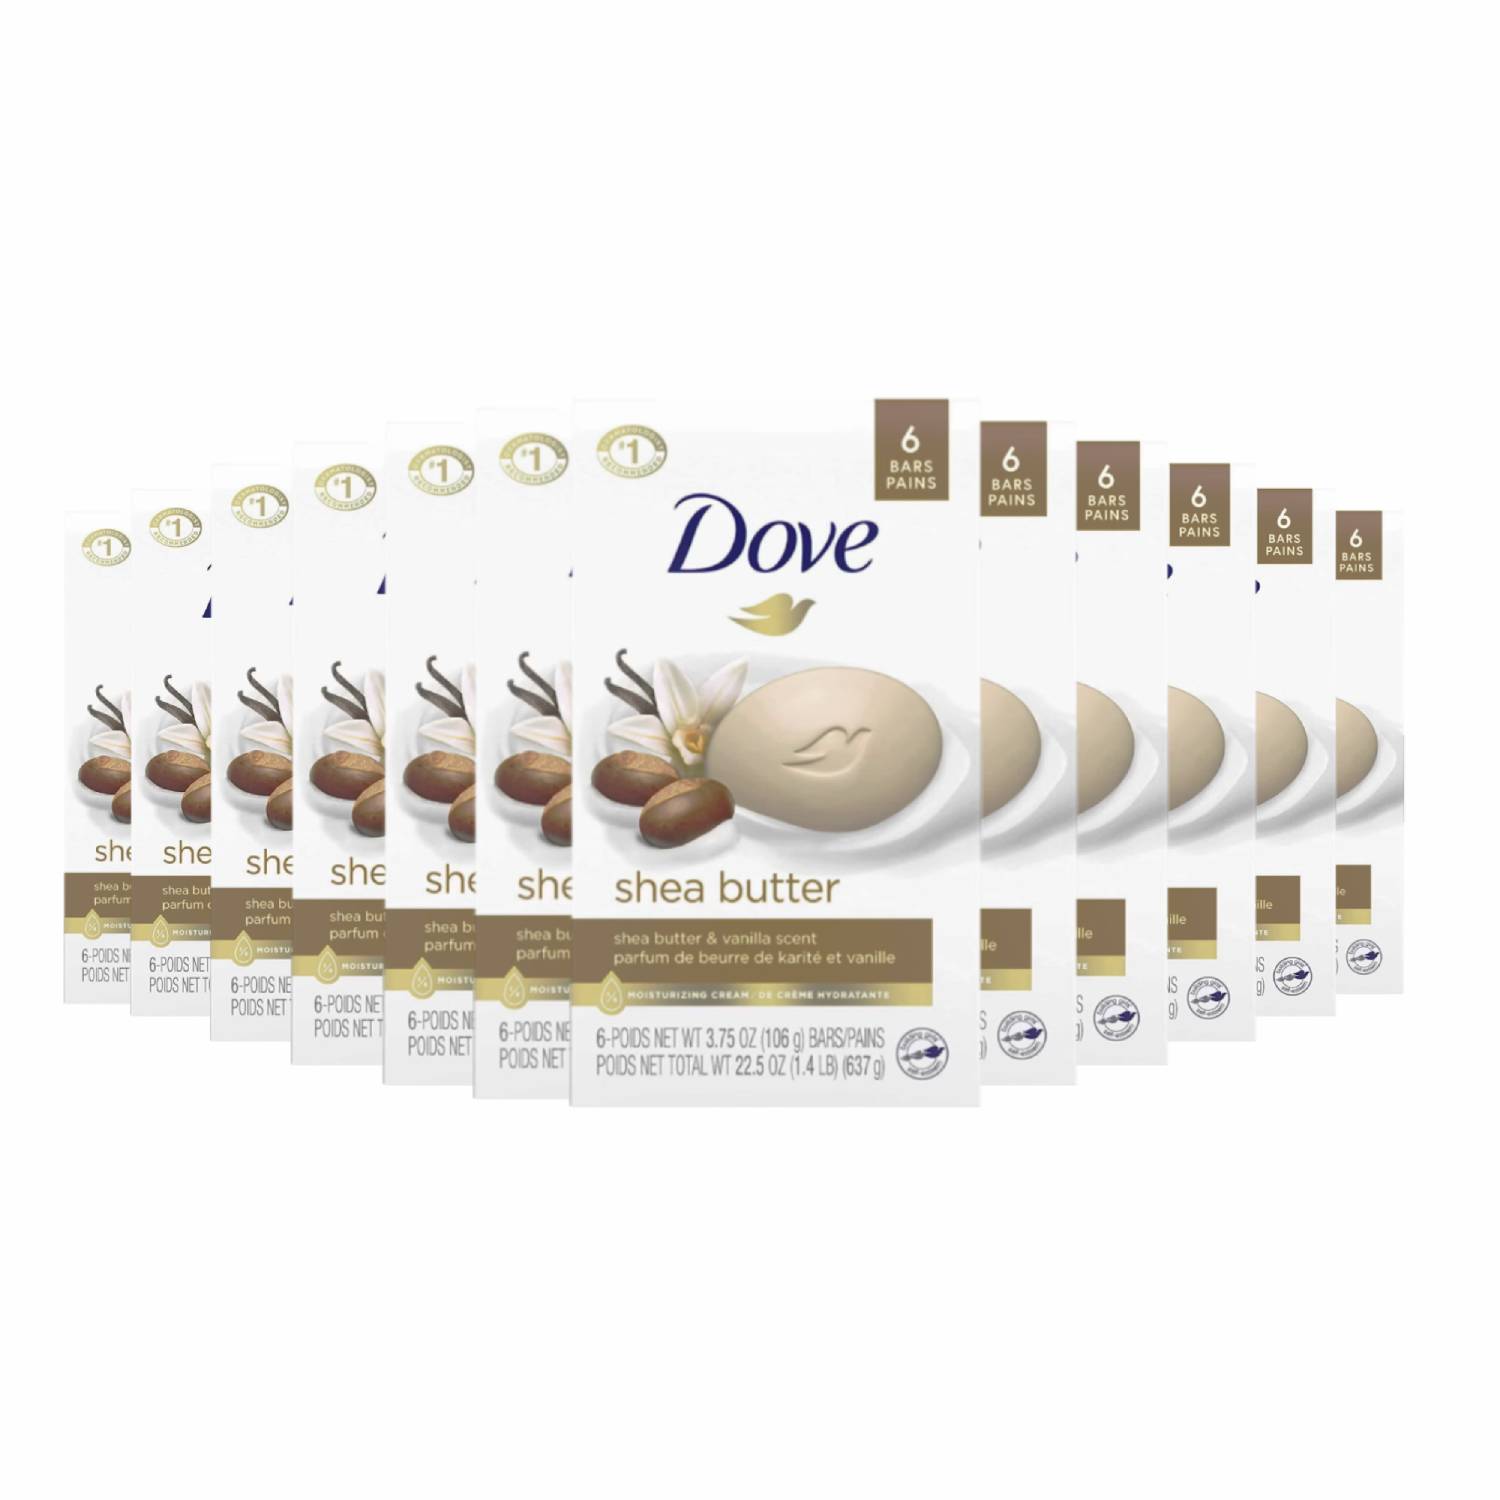 Dove Beauty Bar Gentle Skin Cleanser Moisturizing for Gentle Soft Skin Care  Shea Butter More Moisturizing Than Bar Soap 3.75 oz, 4 Bars